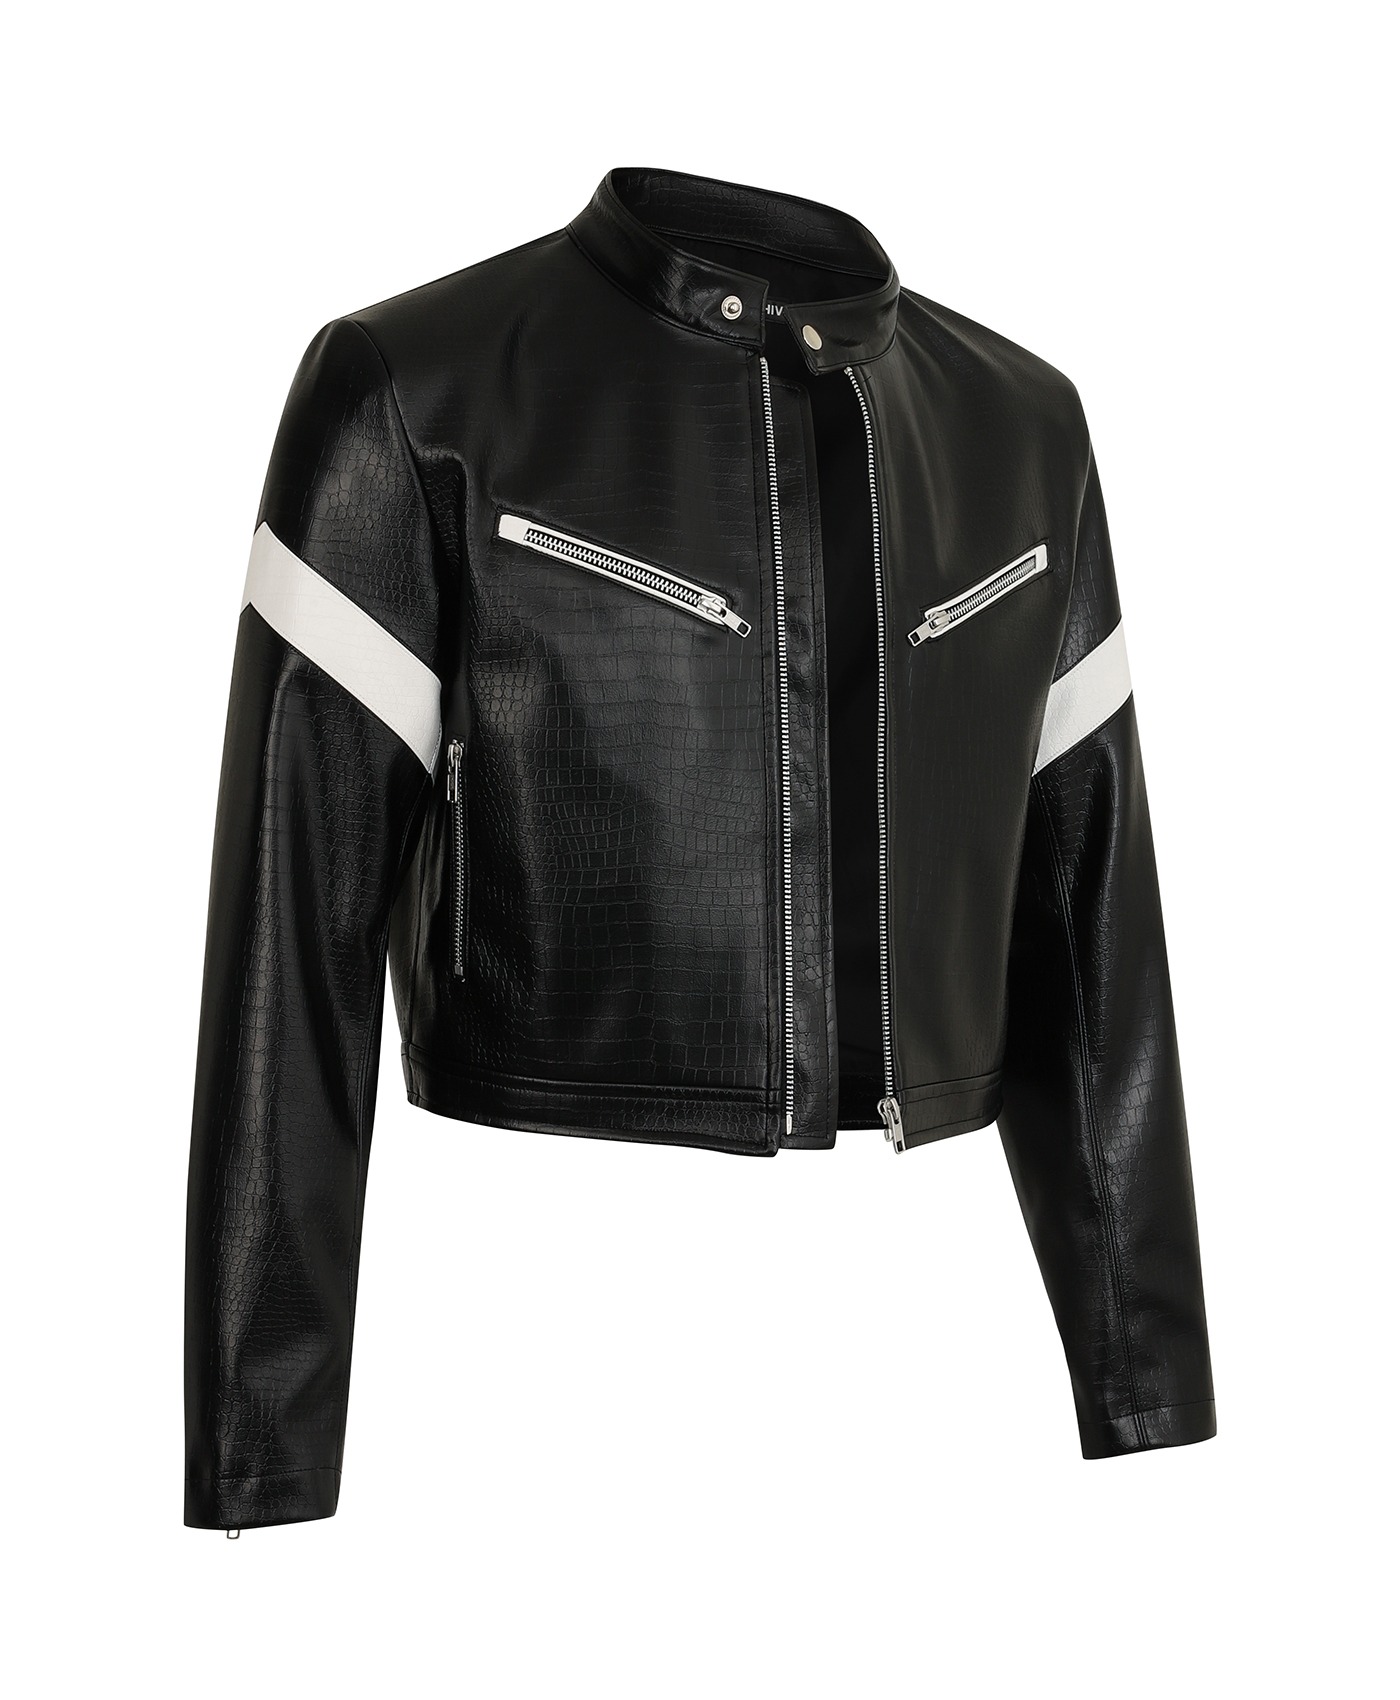 [SOLD OUT] Crocker Leather China Short Jacket